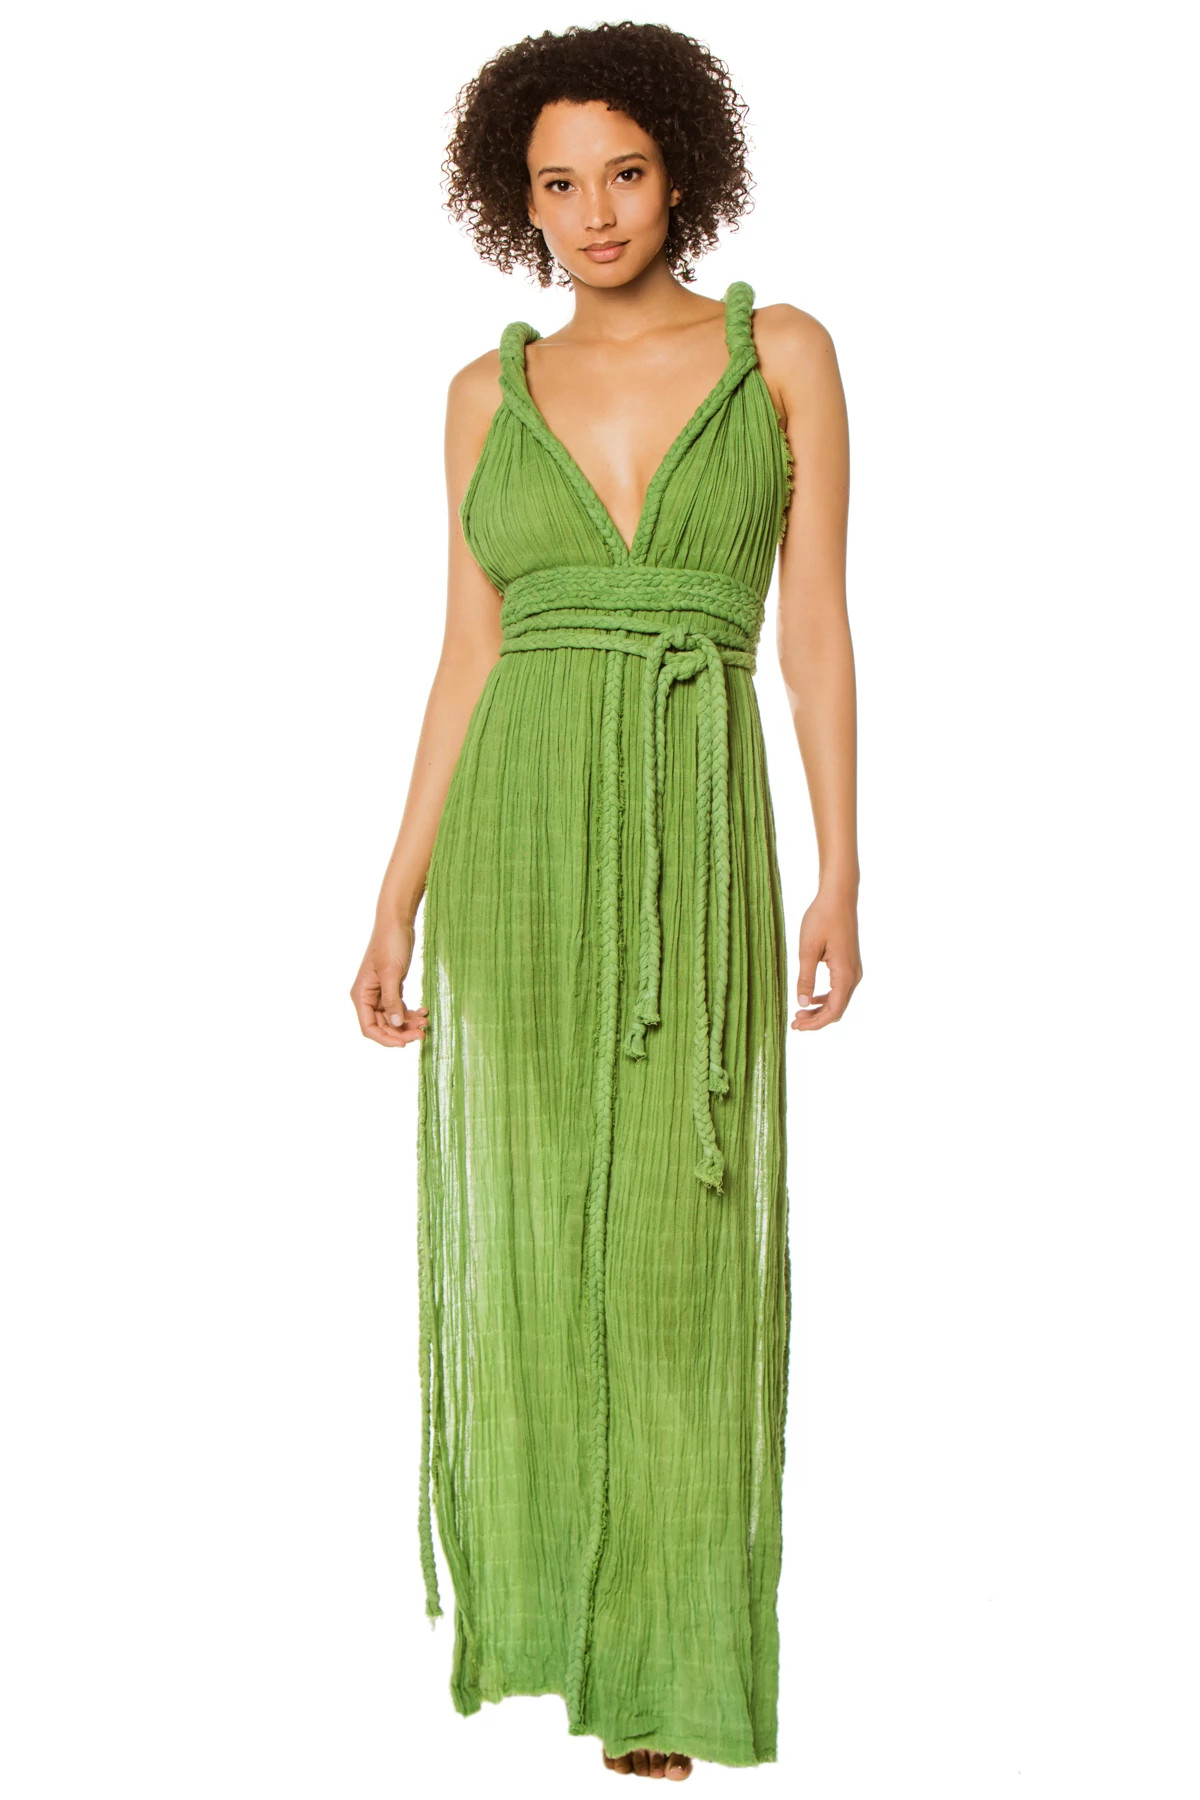 SELVA Selena Full Length Harness Gown image number 1